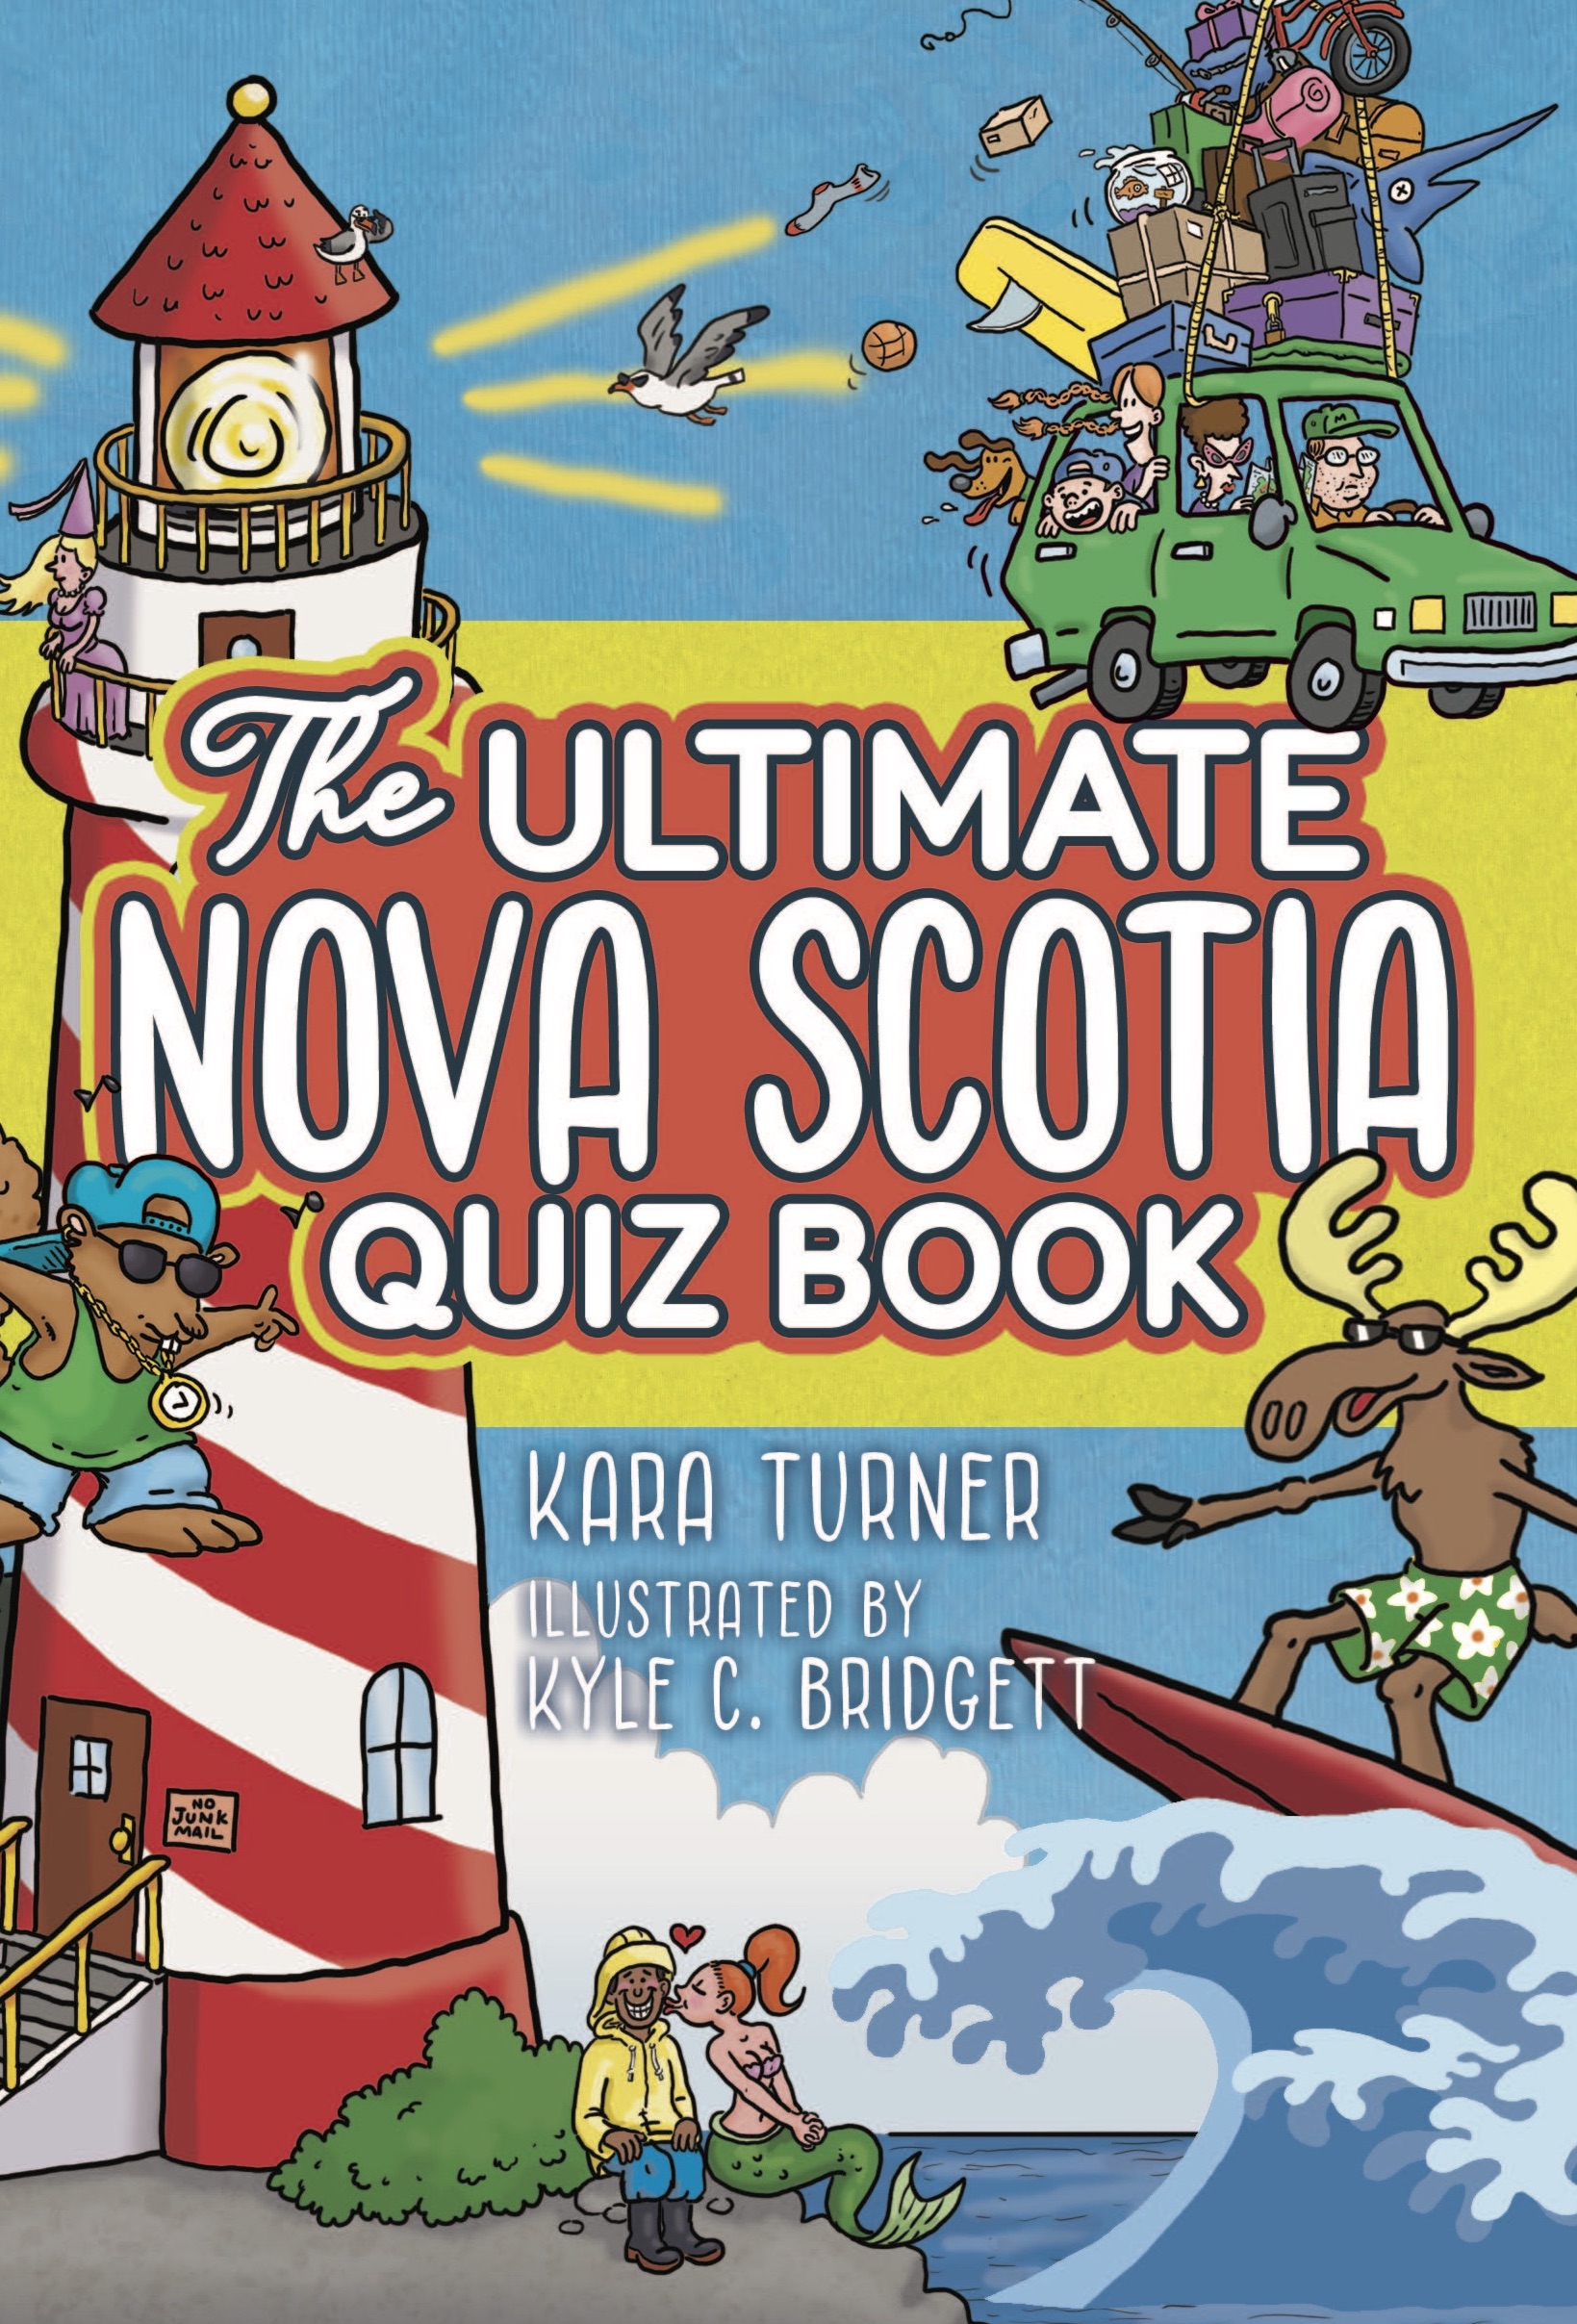 The Ultimate Nova Scotia Quiz Book